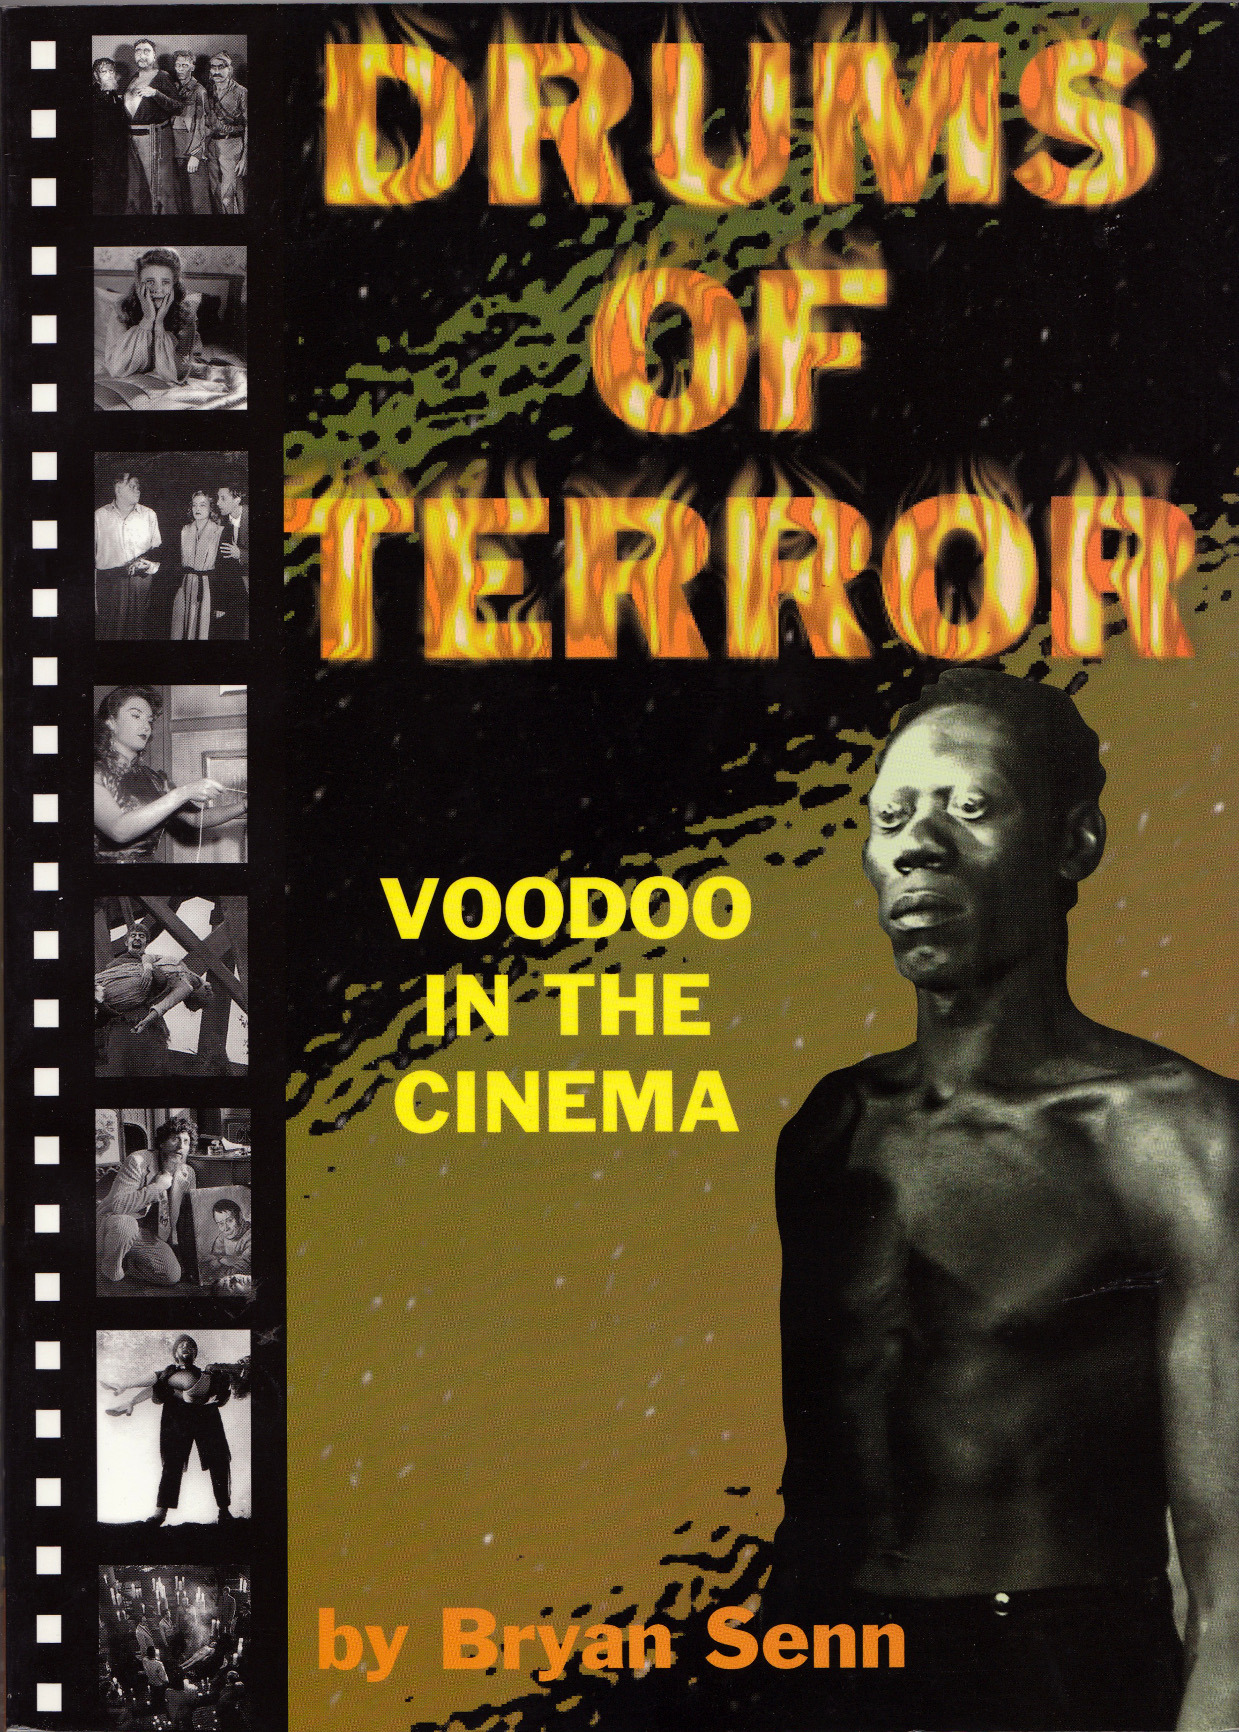 Drums Of Terror: Voodoo in the Cinema, by Bryan Senn (Midnight Marquee Press, 1998).